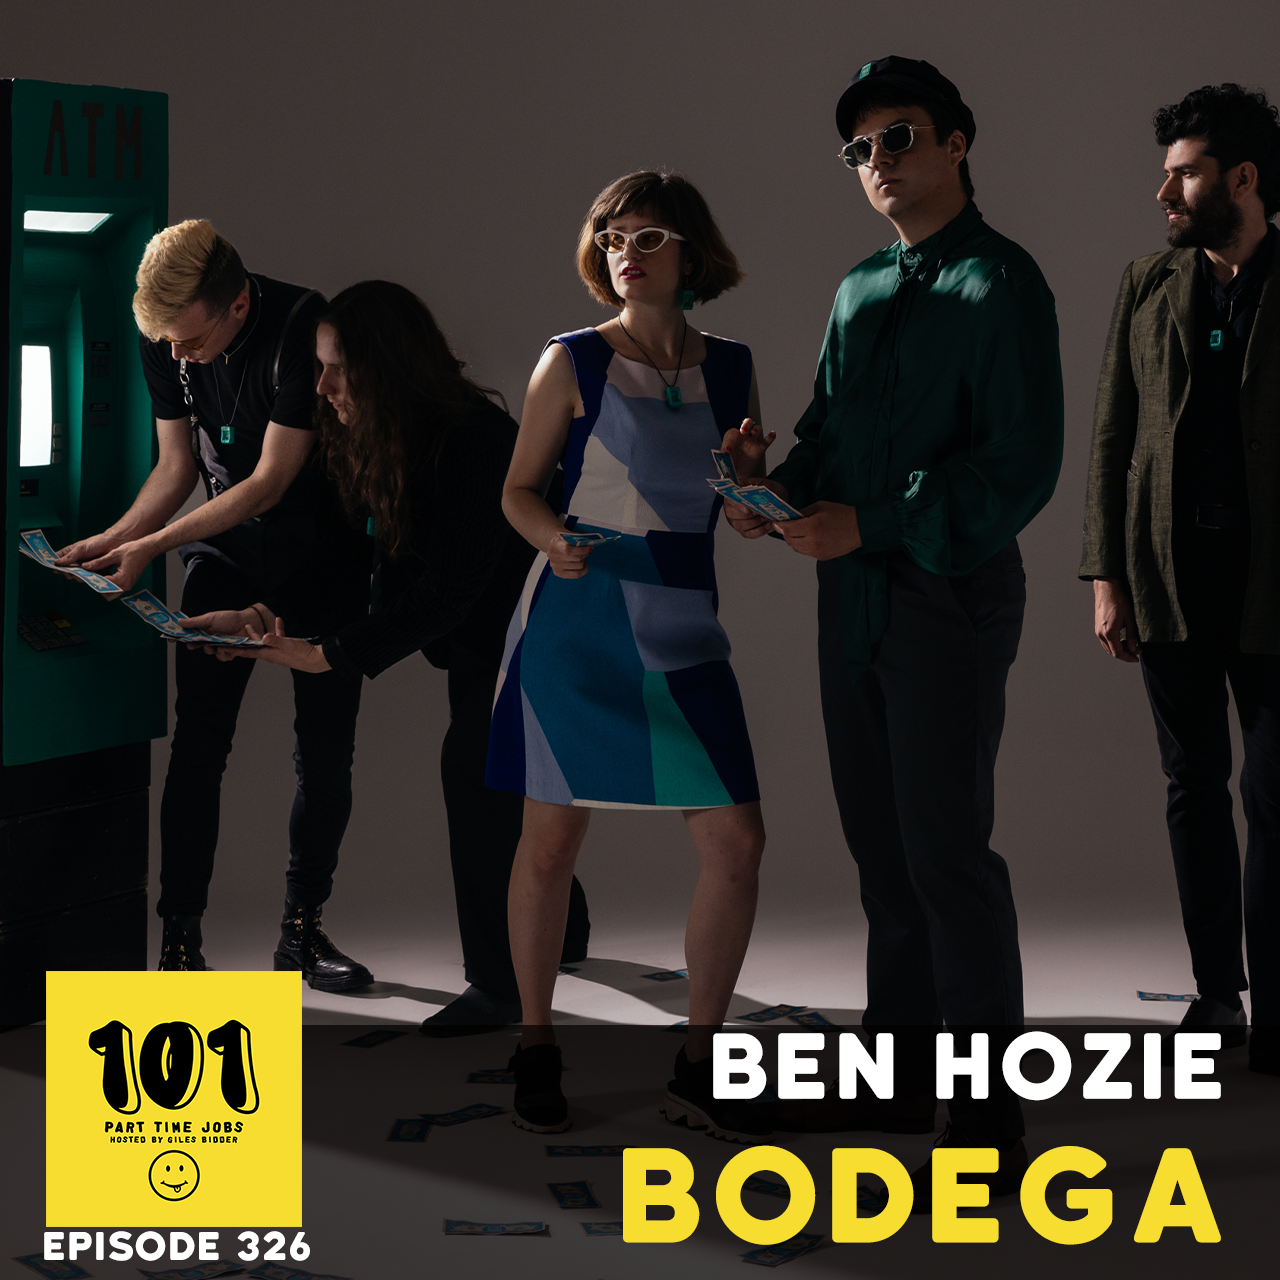 Episode Ben Hozie (Bodega) - "I'm a legend in my own mind"